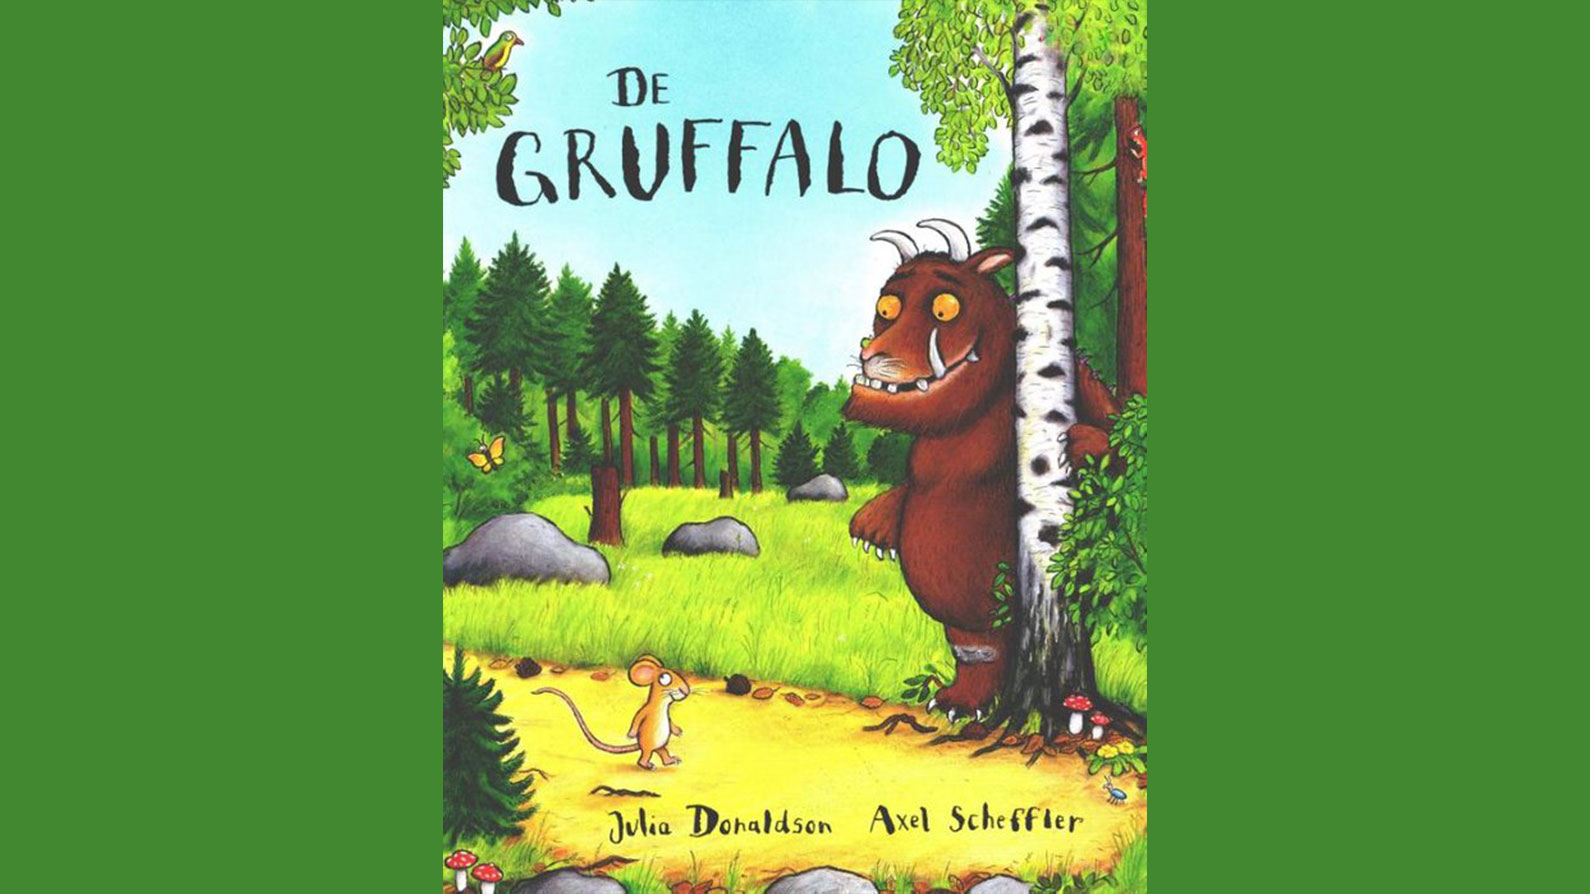 De Gruffalo van Julia Donaldson monster muis bos bomen gras kinderboek review